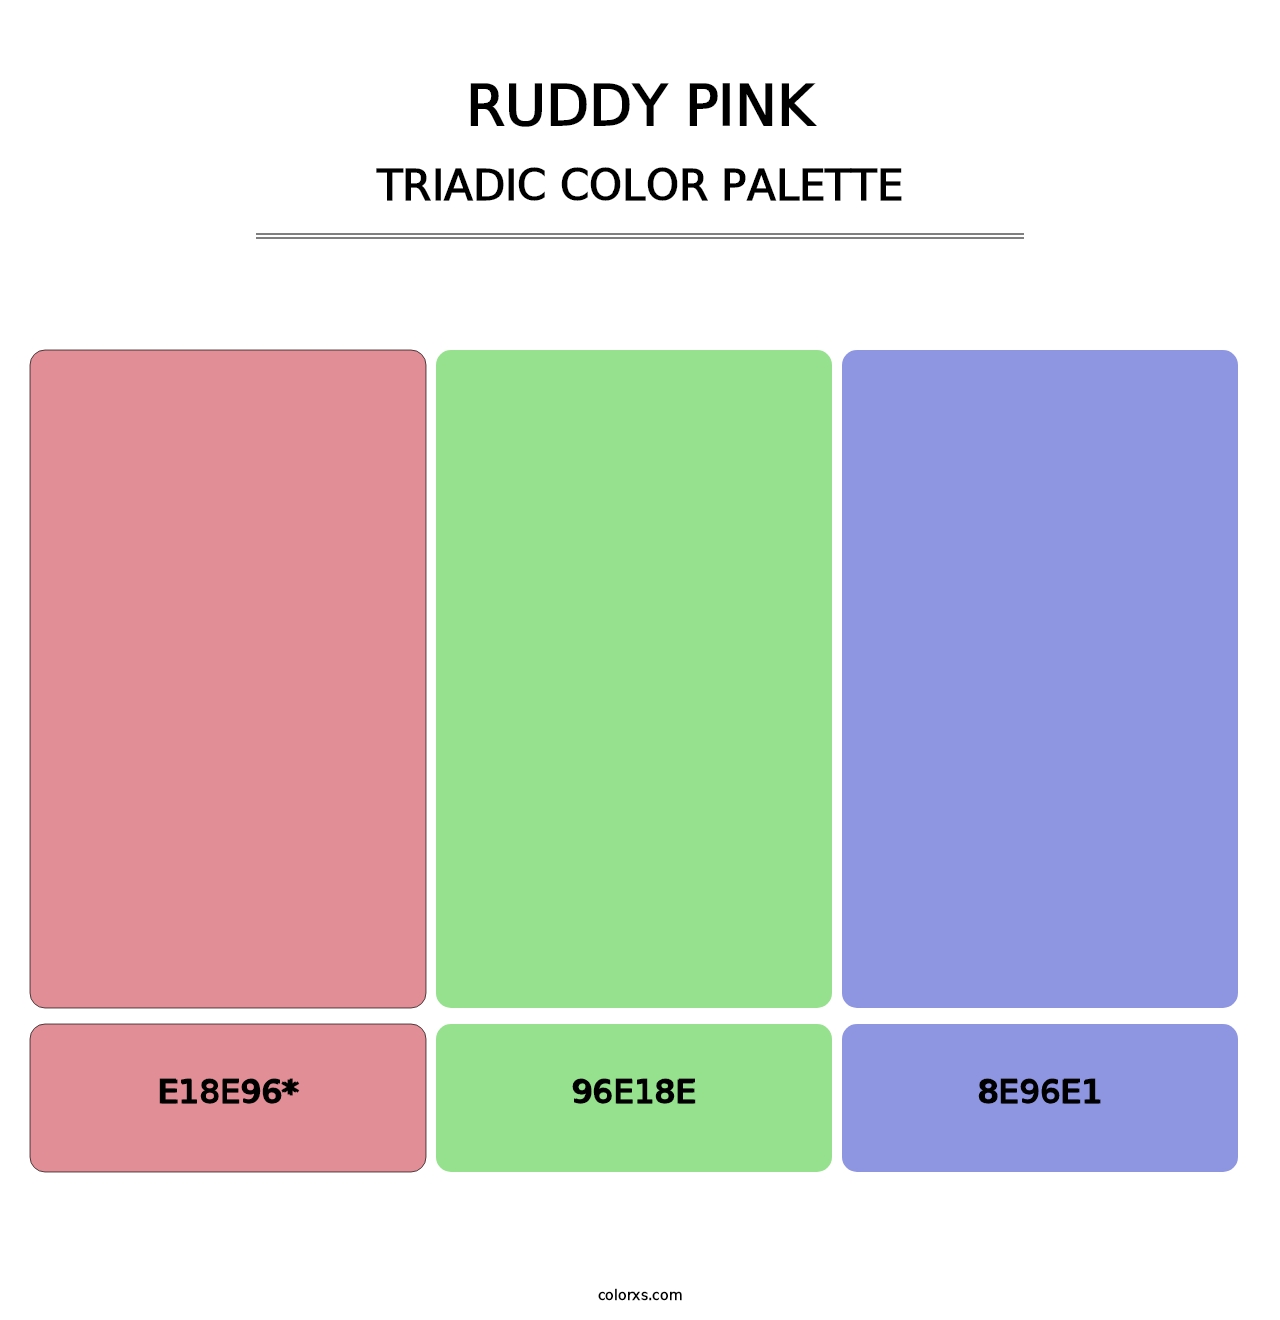 Ruddy Pink - Triadic Color Palette